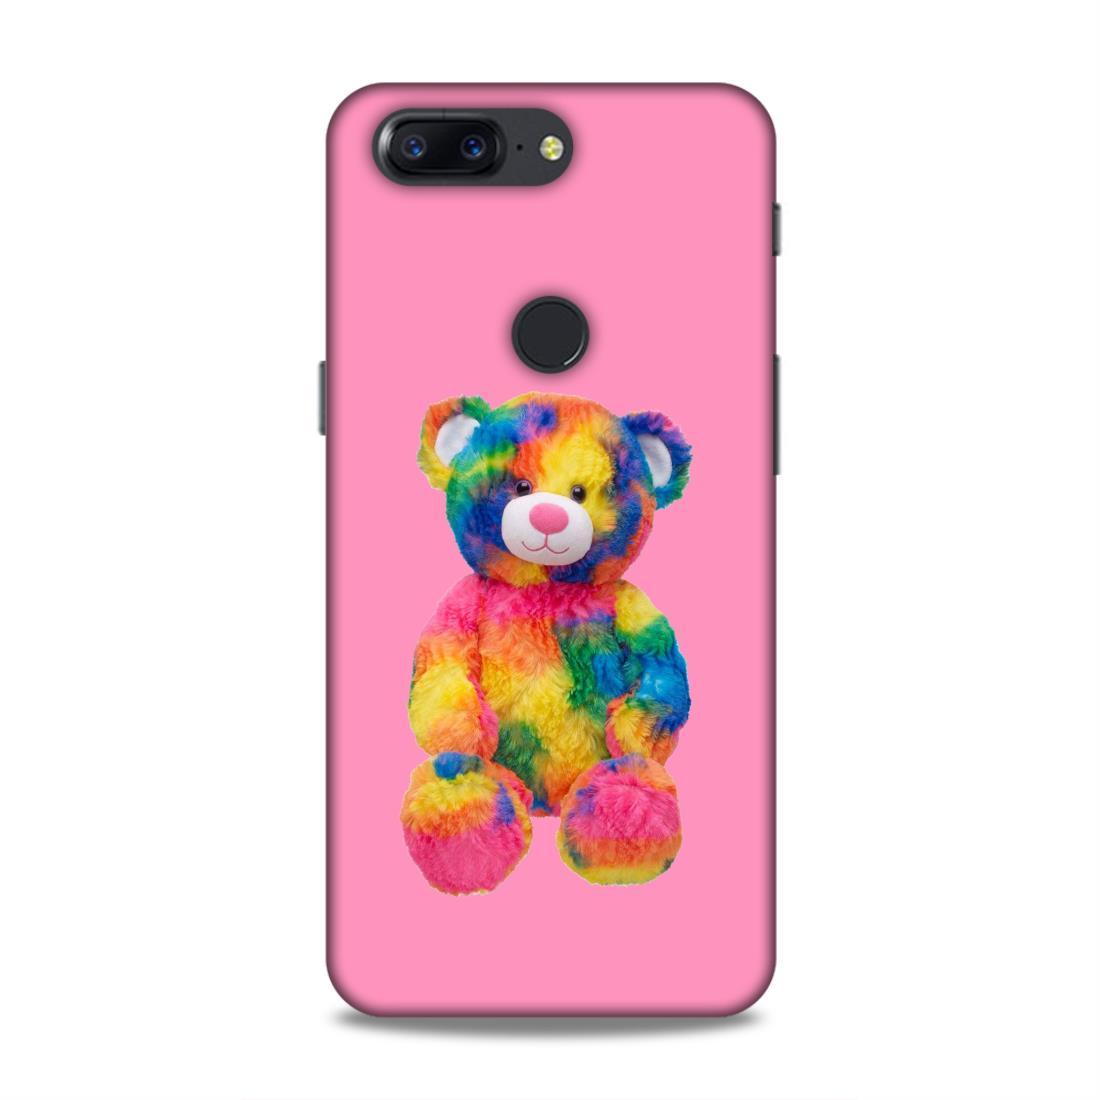 Multicolour Teddy Bear OnePlus 5T Mobile Case Cover